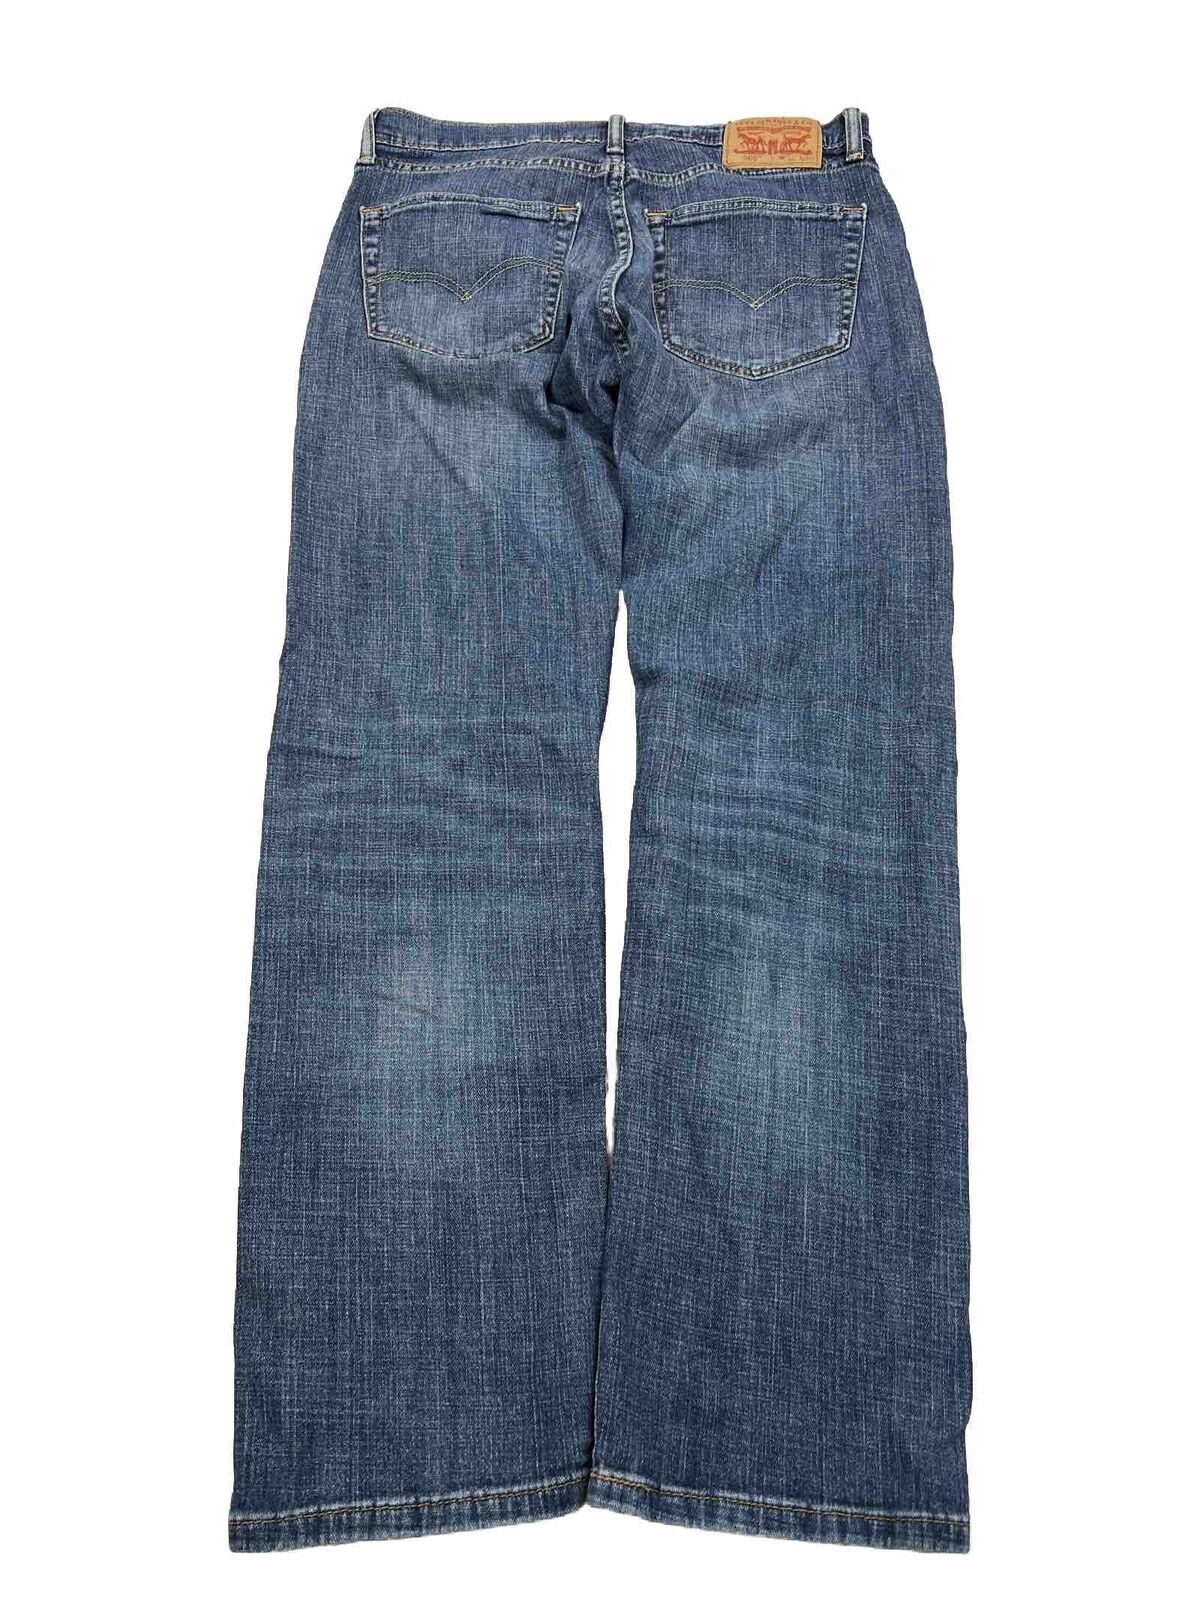 Levi's Men's Medium Wash 505 Straight Leg Jeans - 32x30